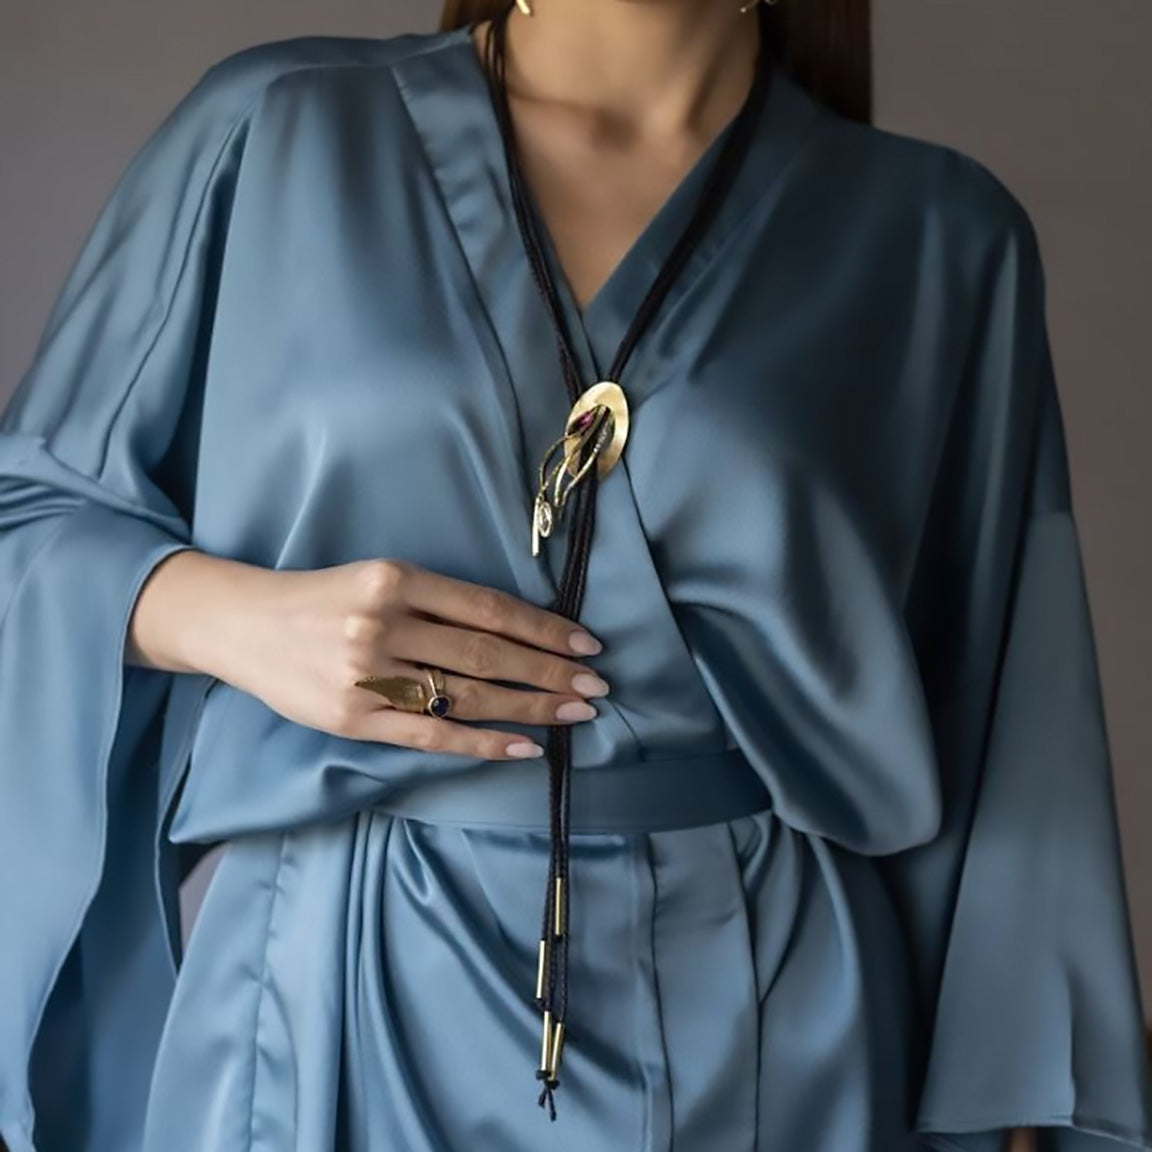 Kalliope Elegant Pendant Necklace: Greece Fashion Statement